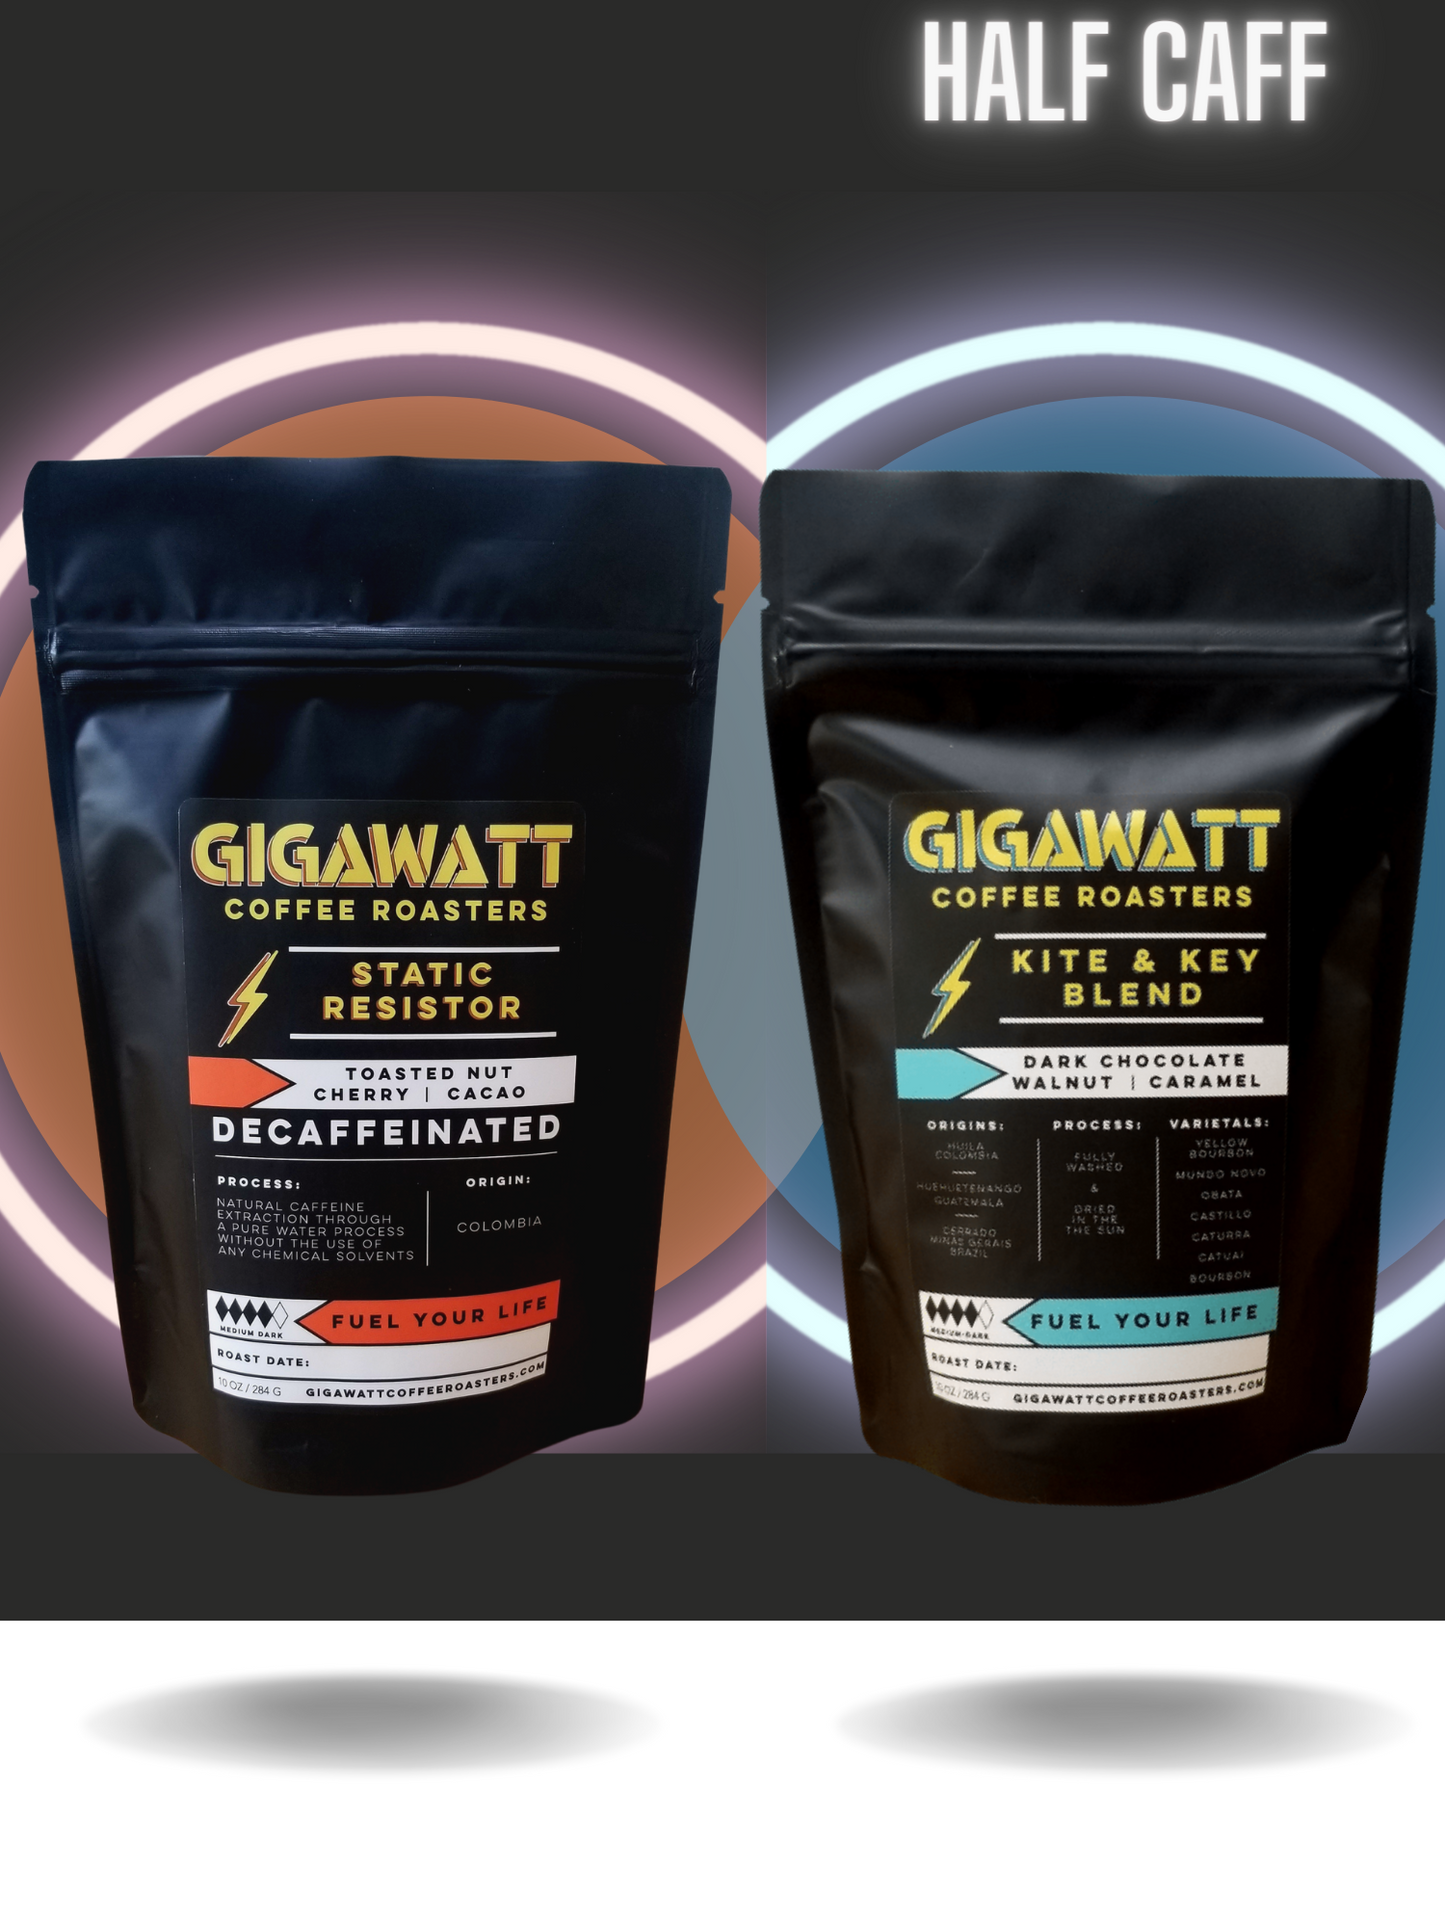 Half Caff Coffee – Gigawatt Coffee Roasters